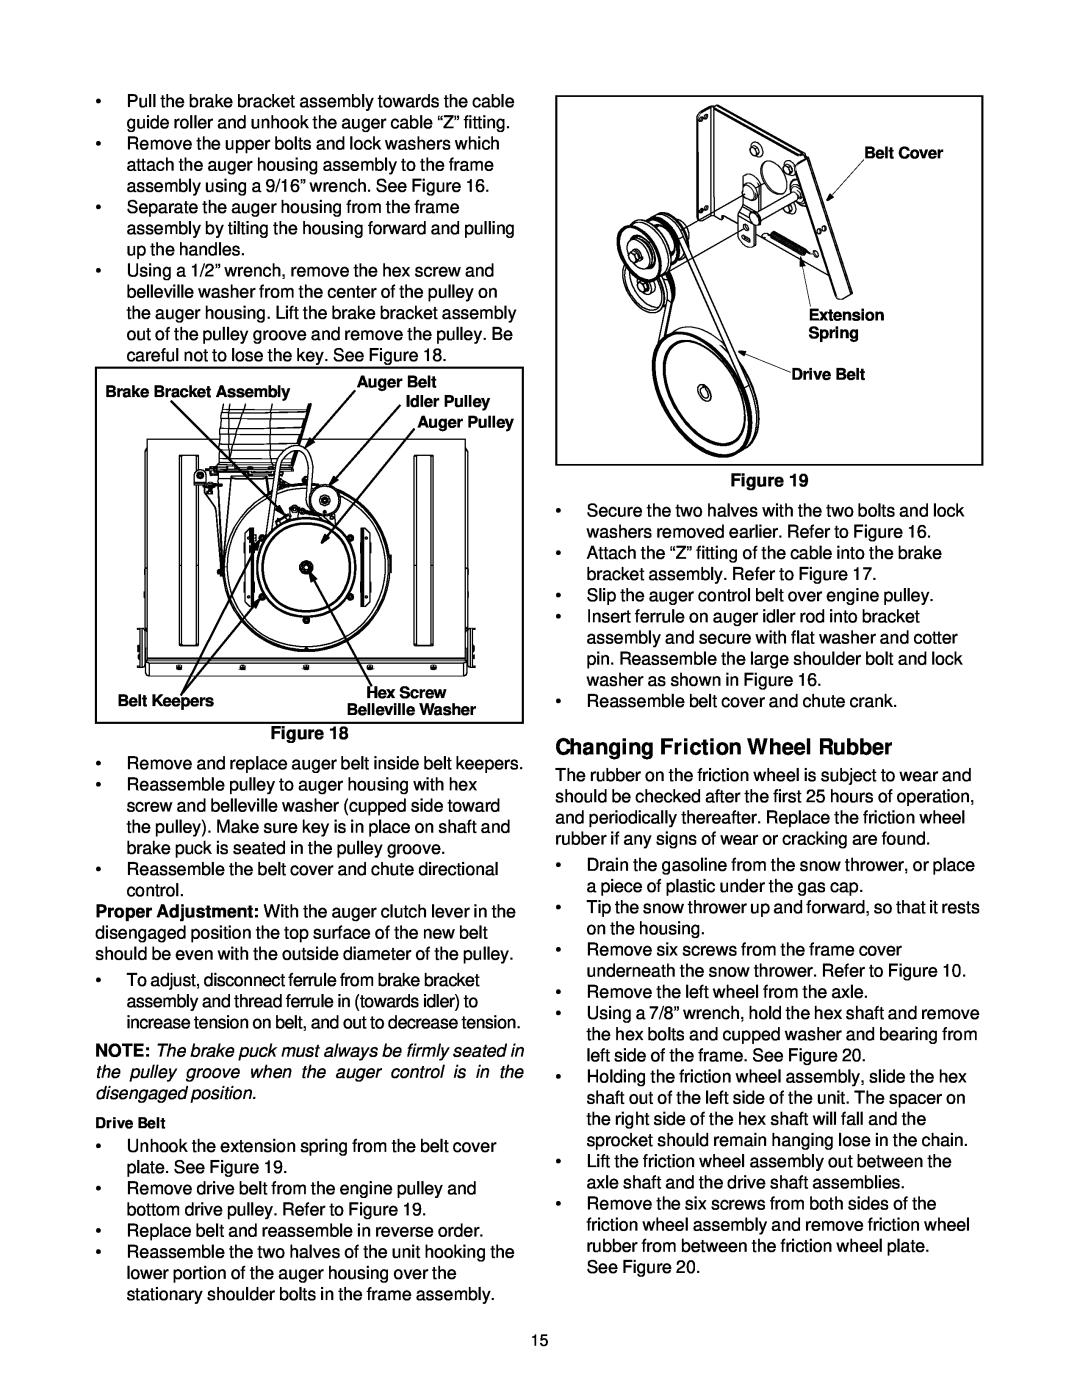 Yard-Man 31AE993I401 manual Changing Friction Wheel Rubber, Drive Belt, Figure 